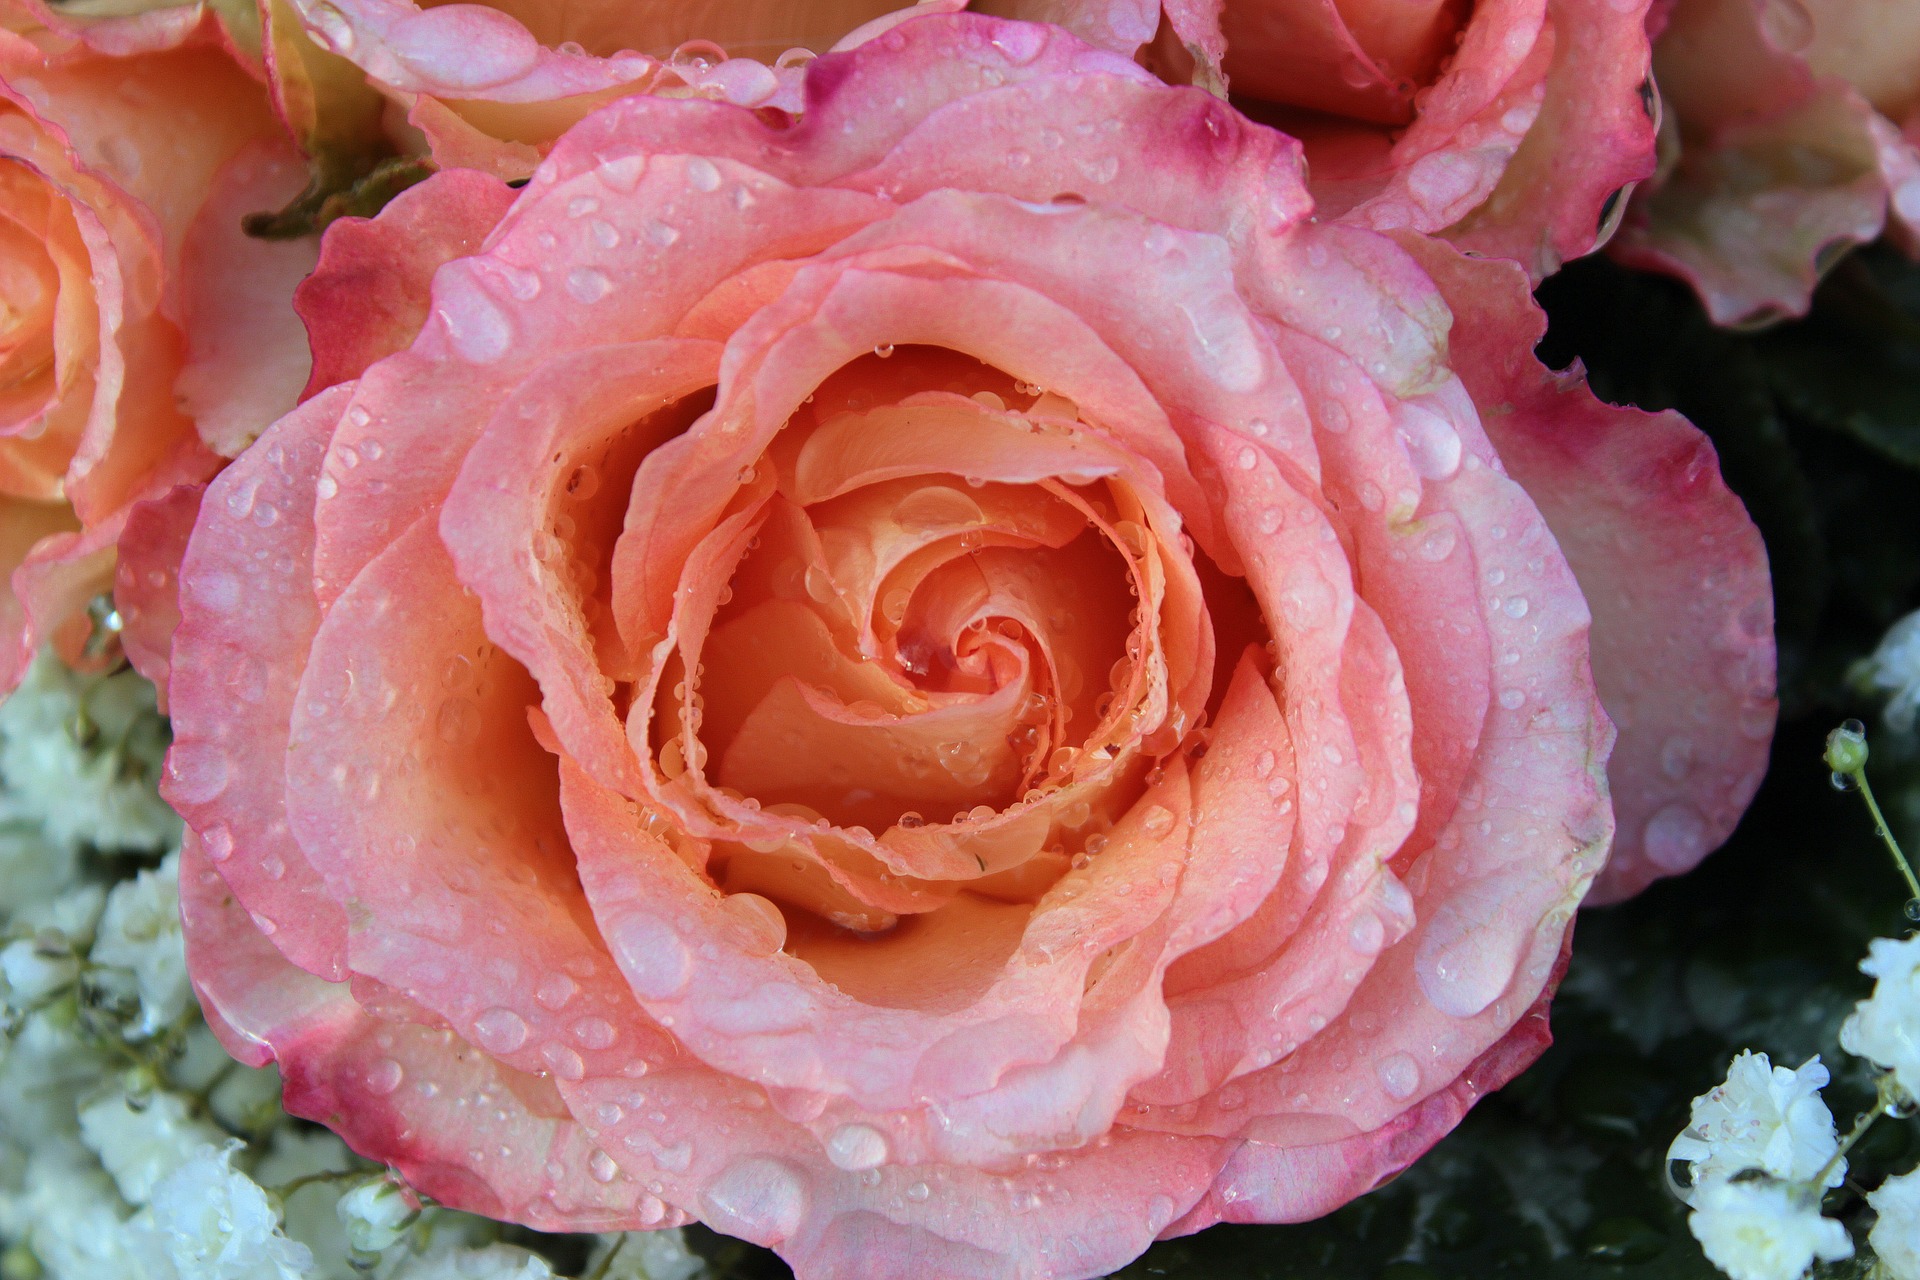 Blooming rose photo